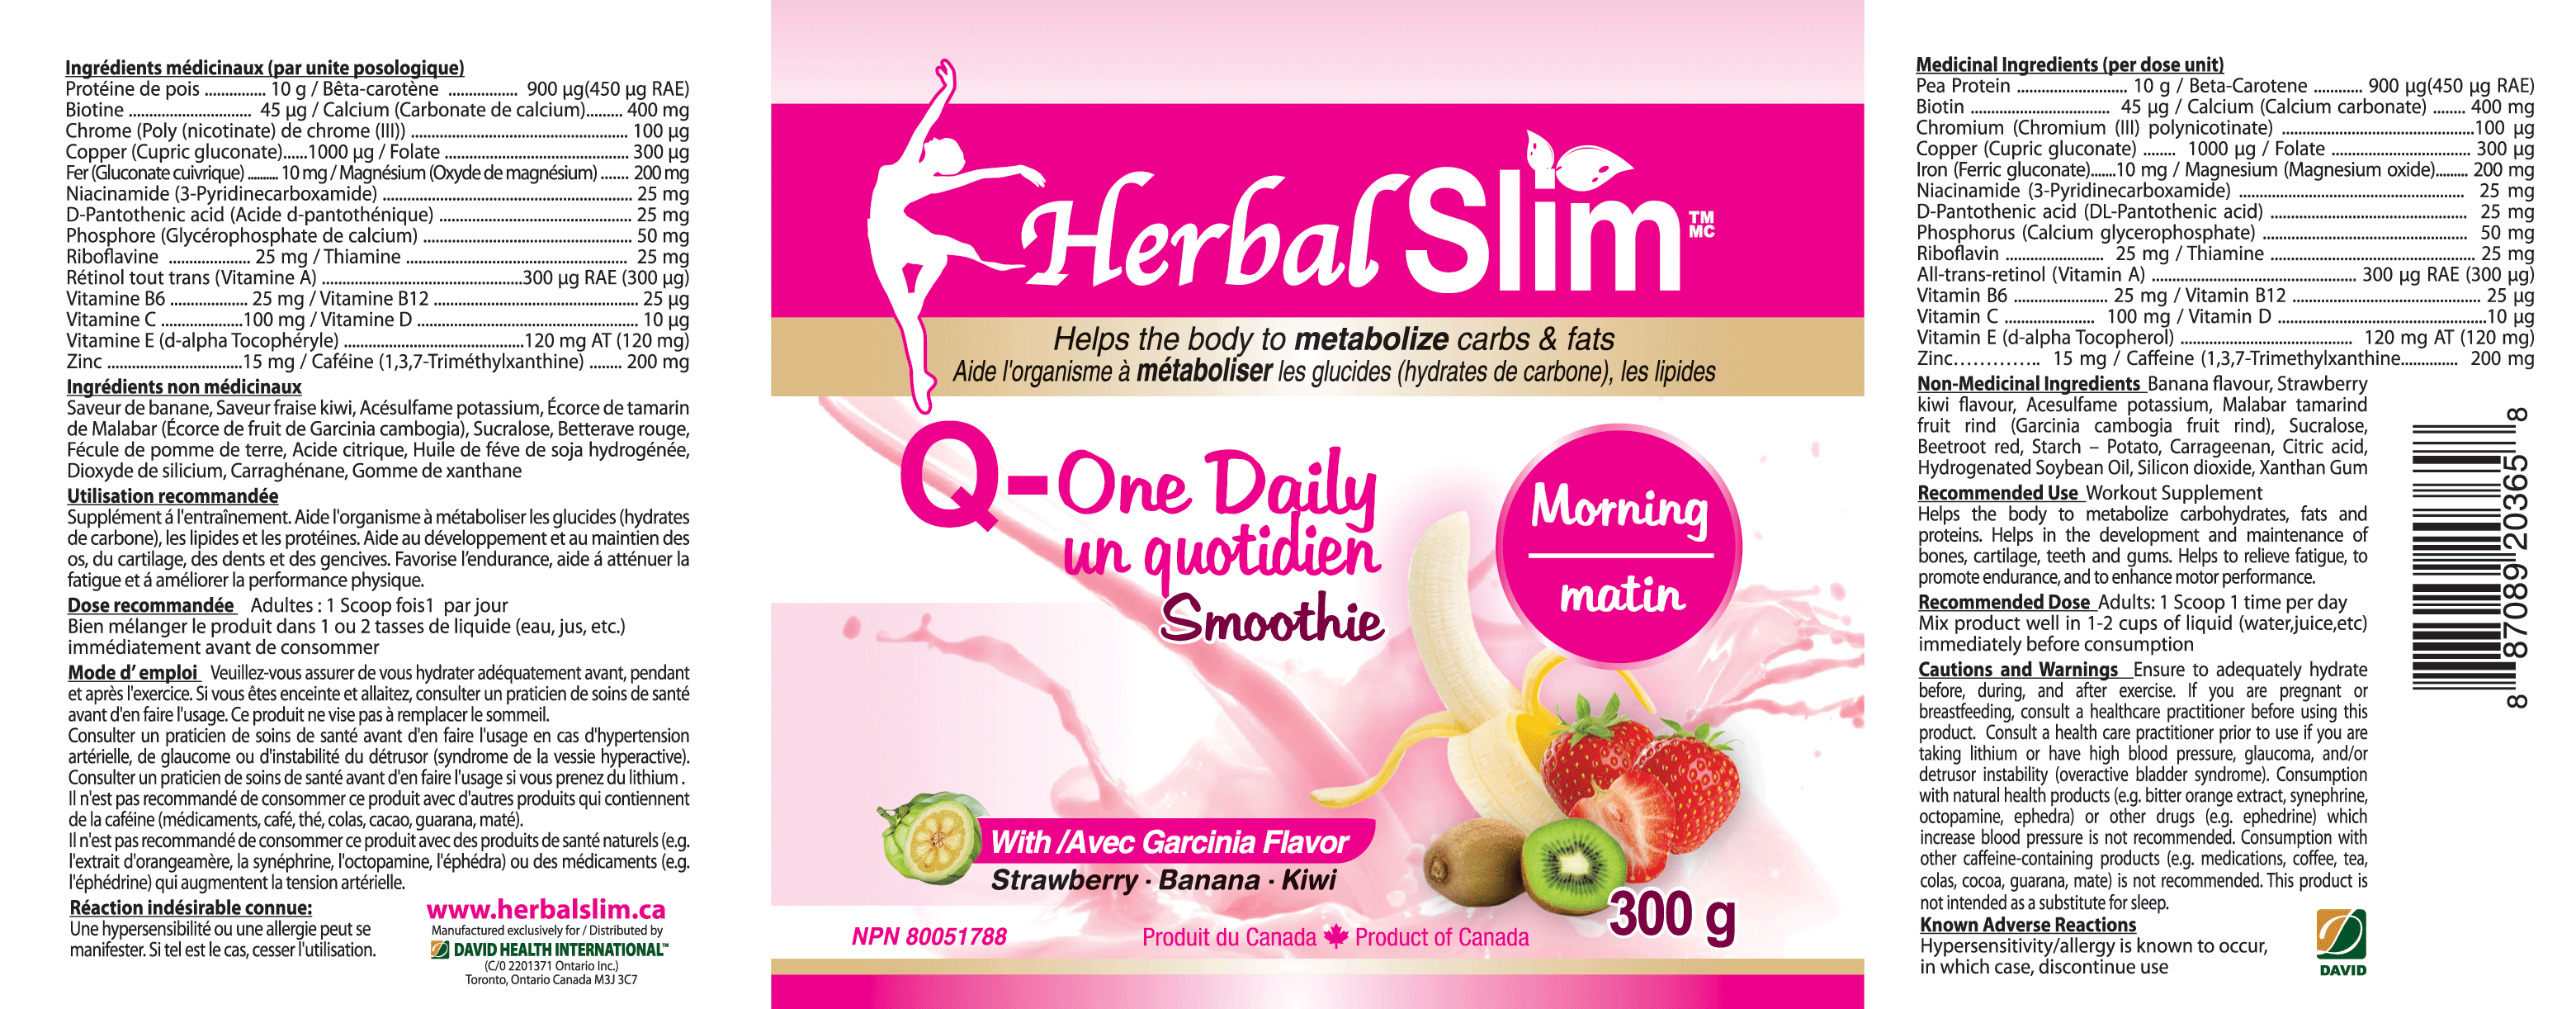 Herbal SLIM Q-ONE DAILY SMOOTHIE